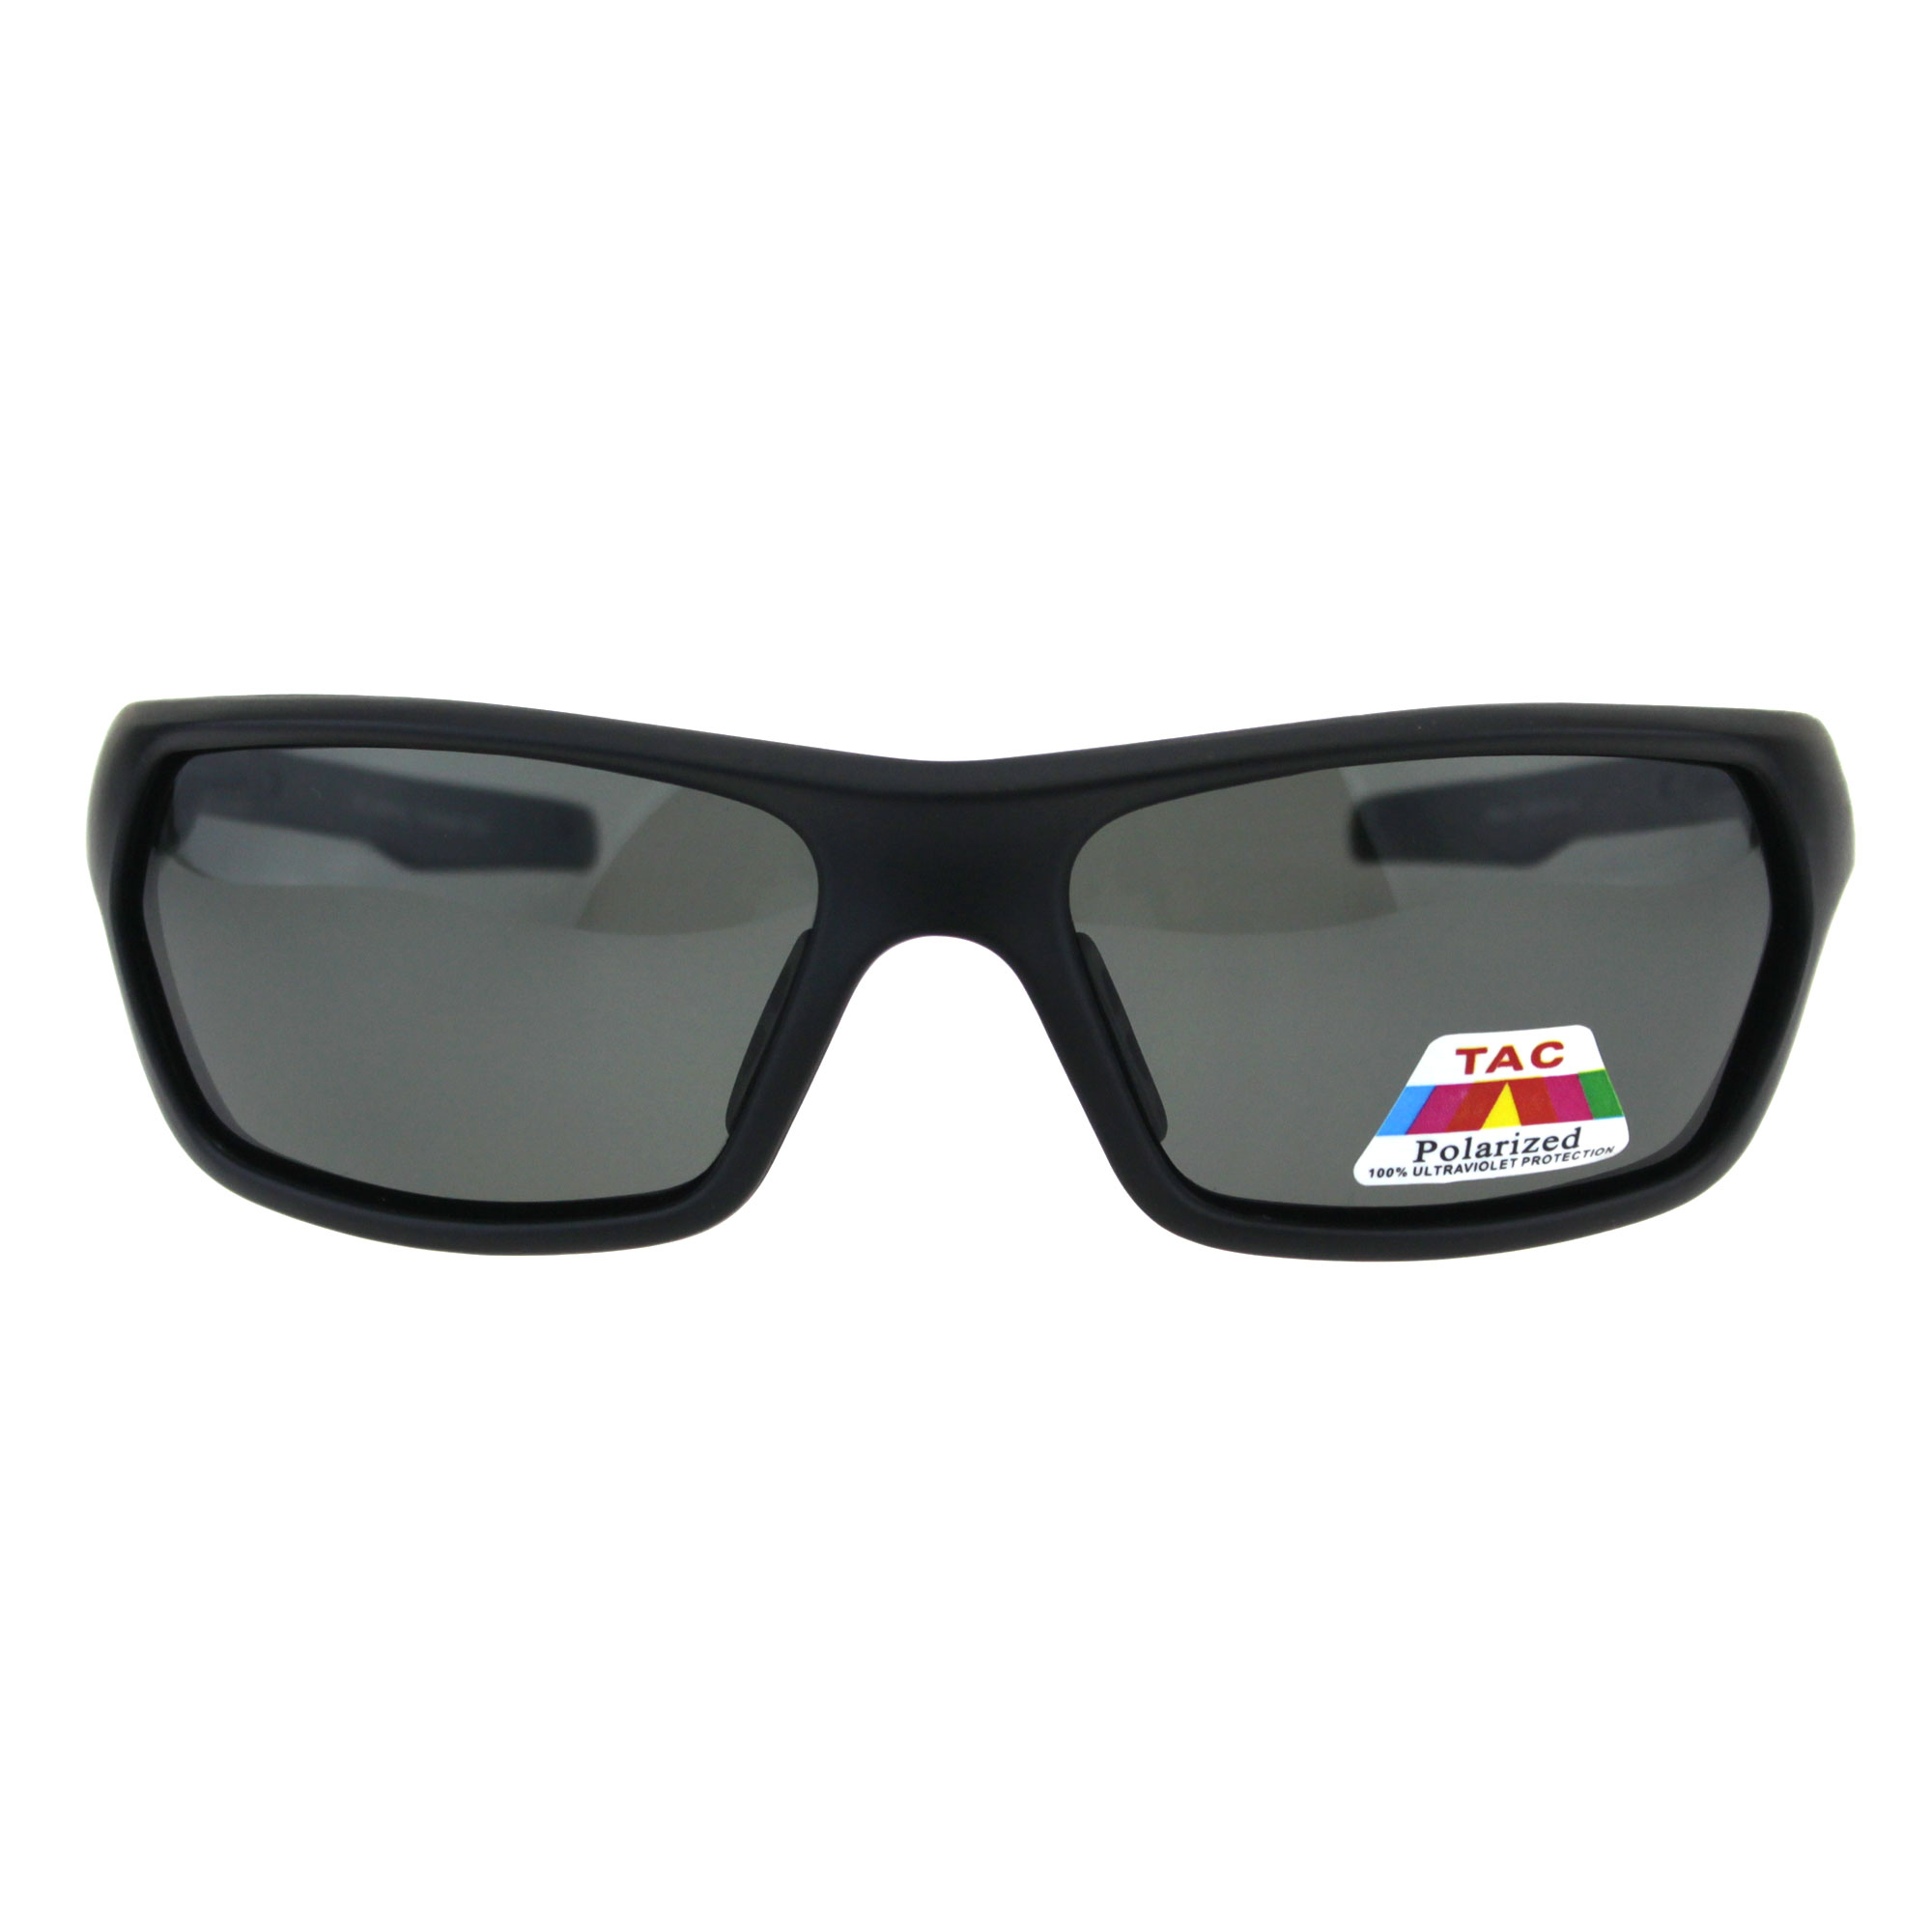 Polarized No Glare Warp Plastic Sport Light Weight Mens Sunglasses Matte Black - image 2 of 3